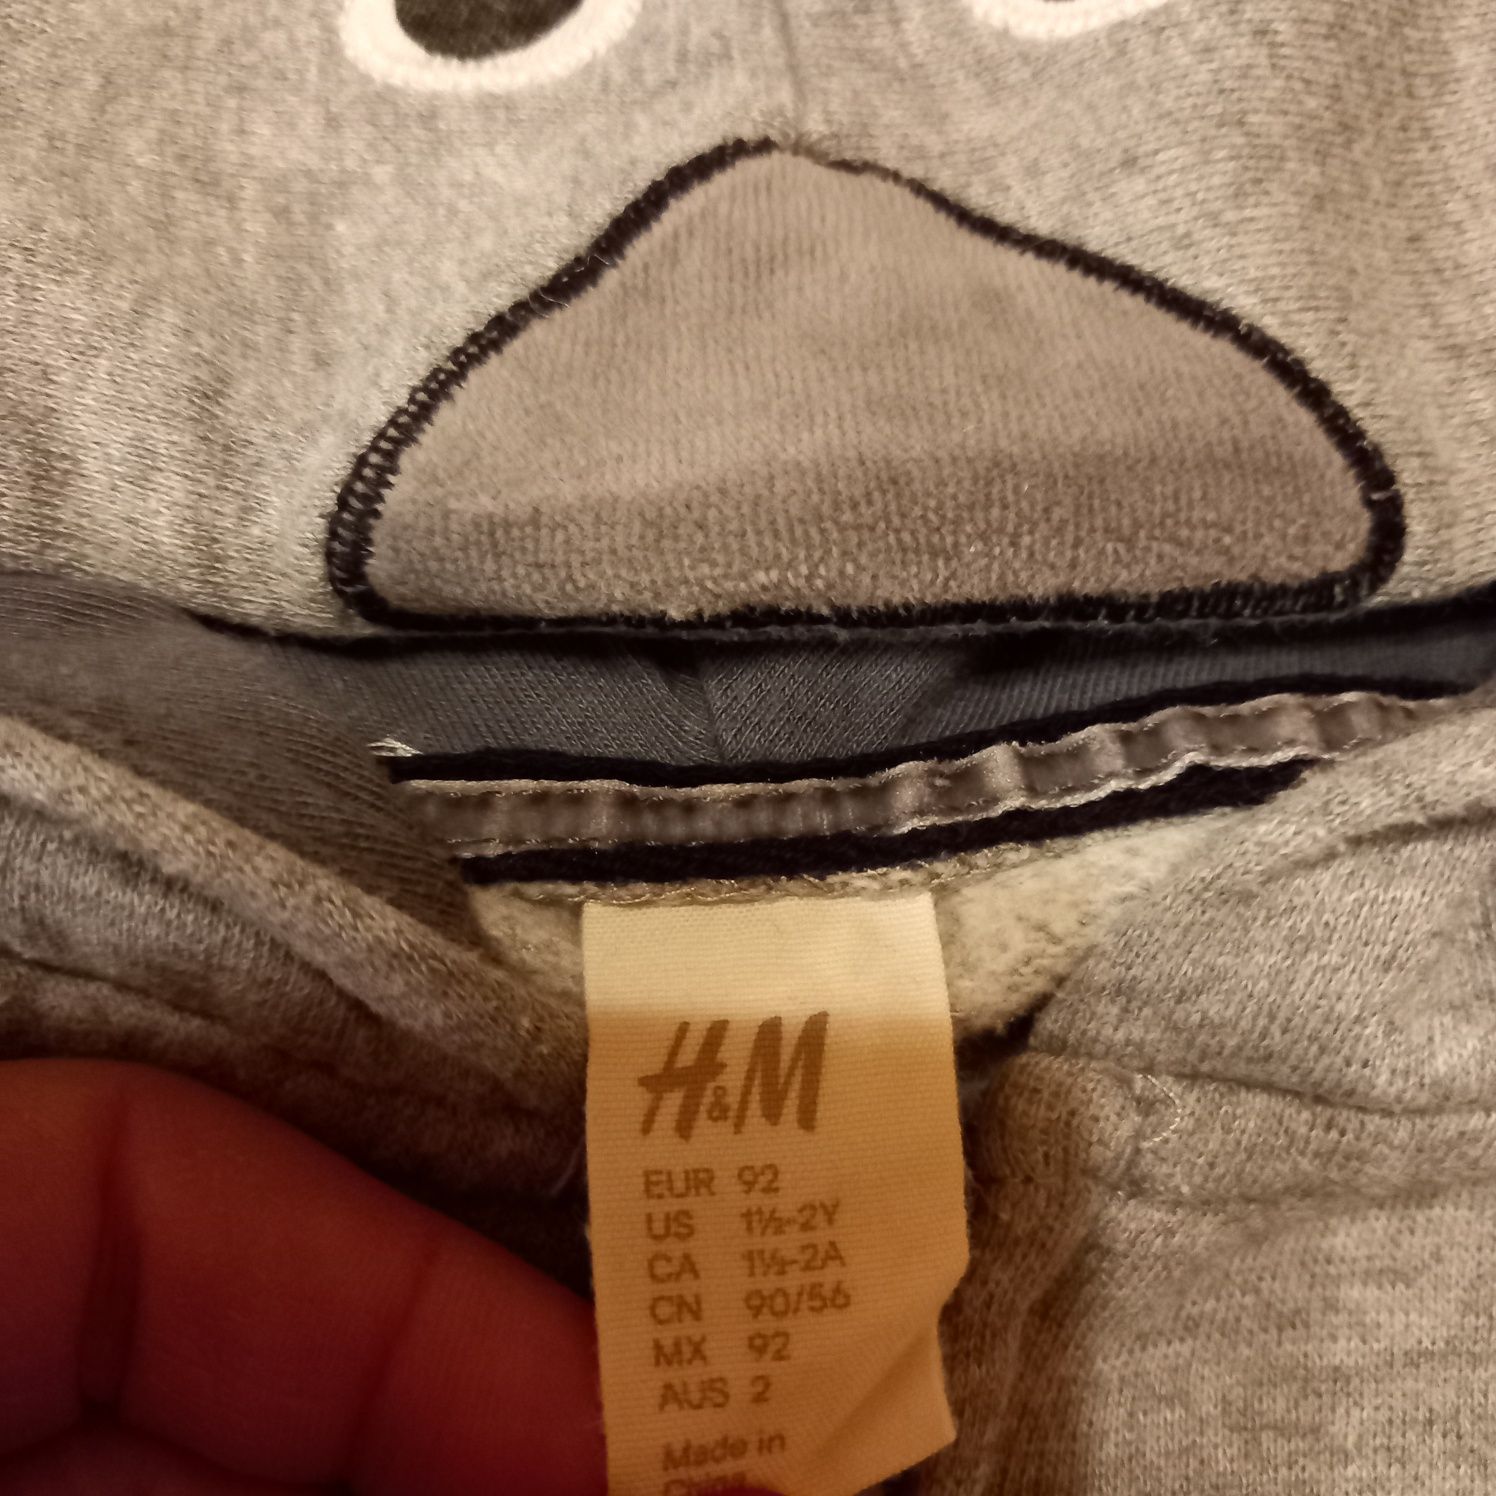 Bluza rozsuwana H&M dla dziecka r.92